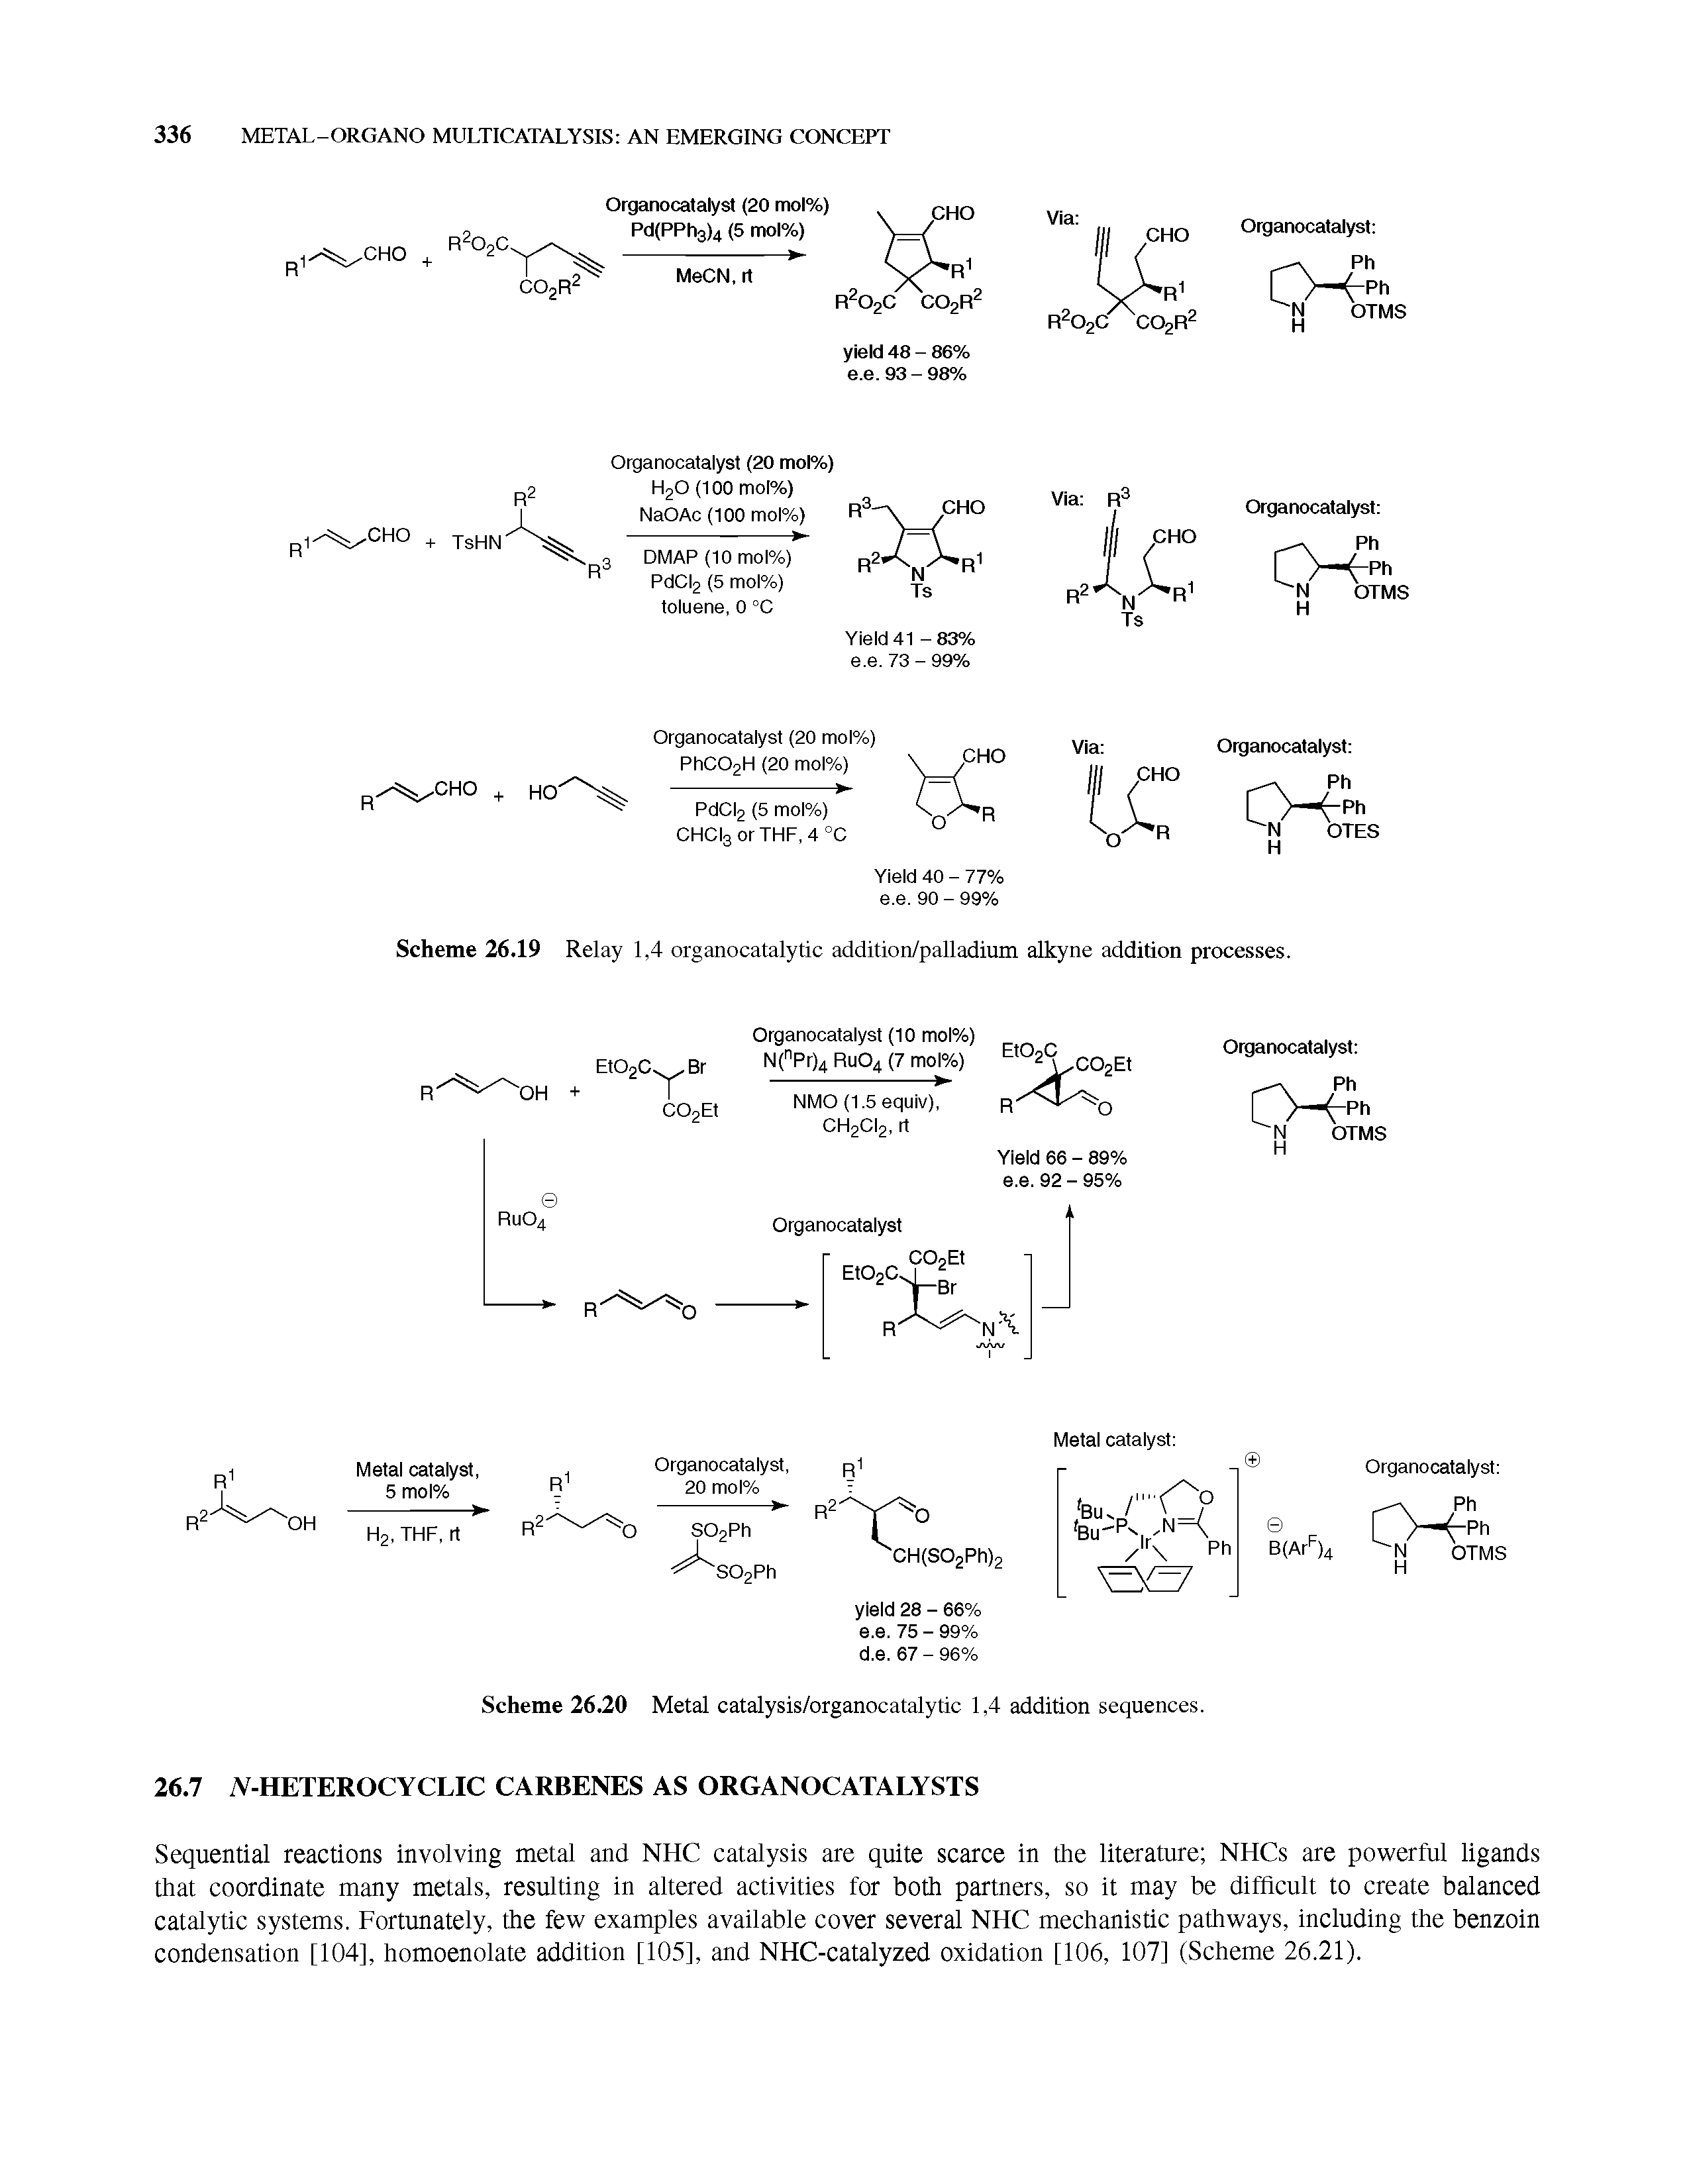 Scheme 26.19 Relay 1,4 organocatalytic addition/palladium alkyne addition processes.